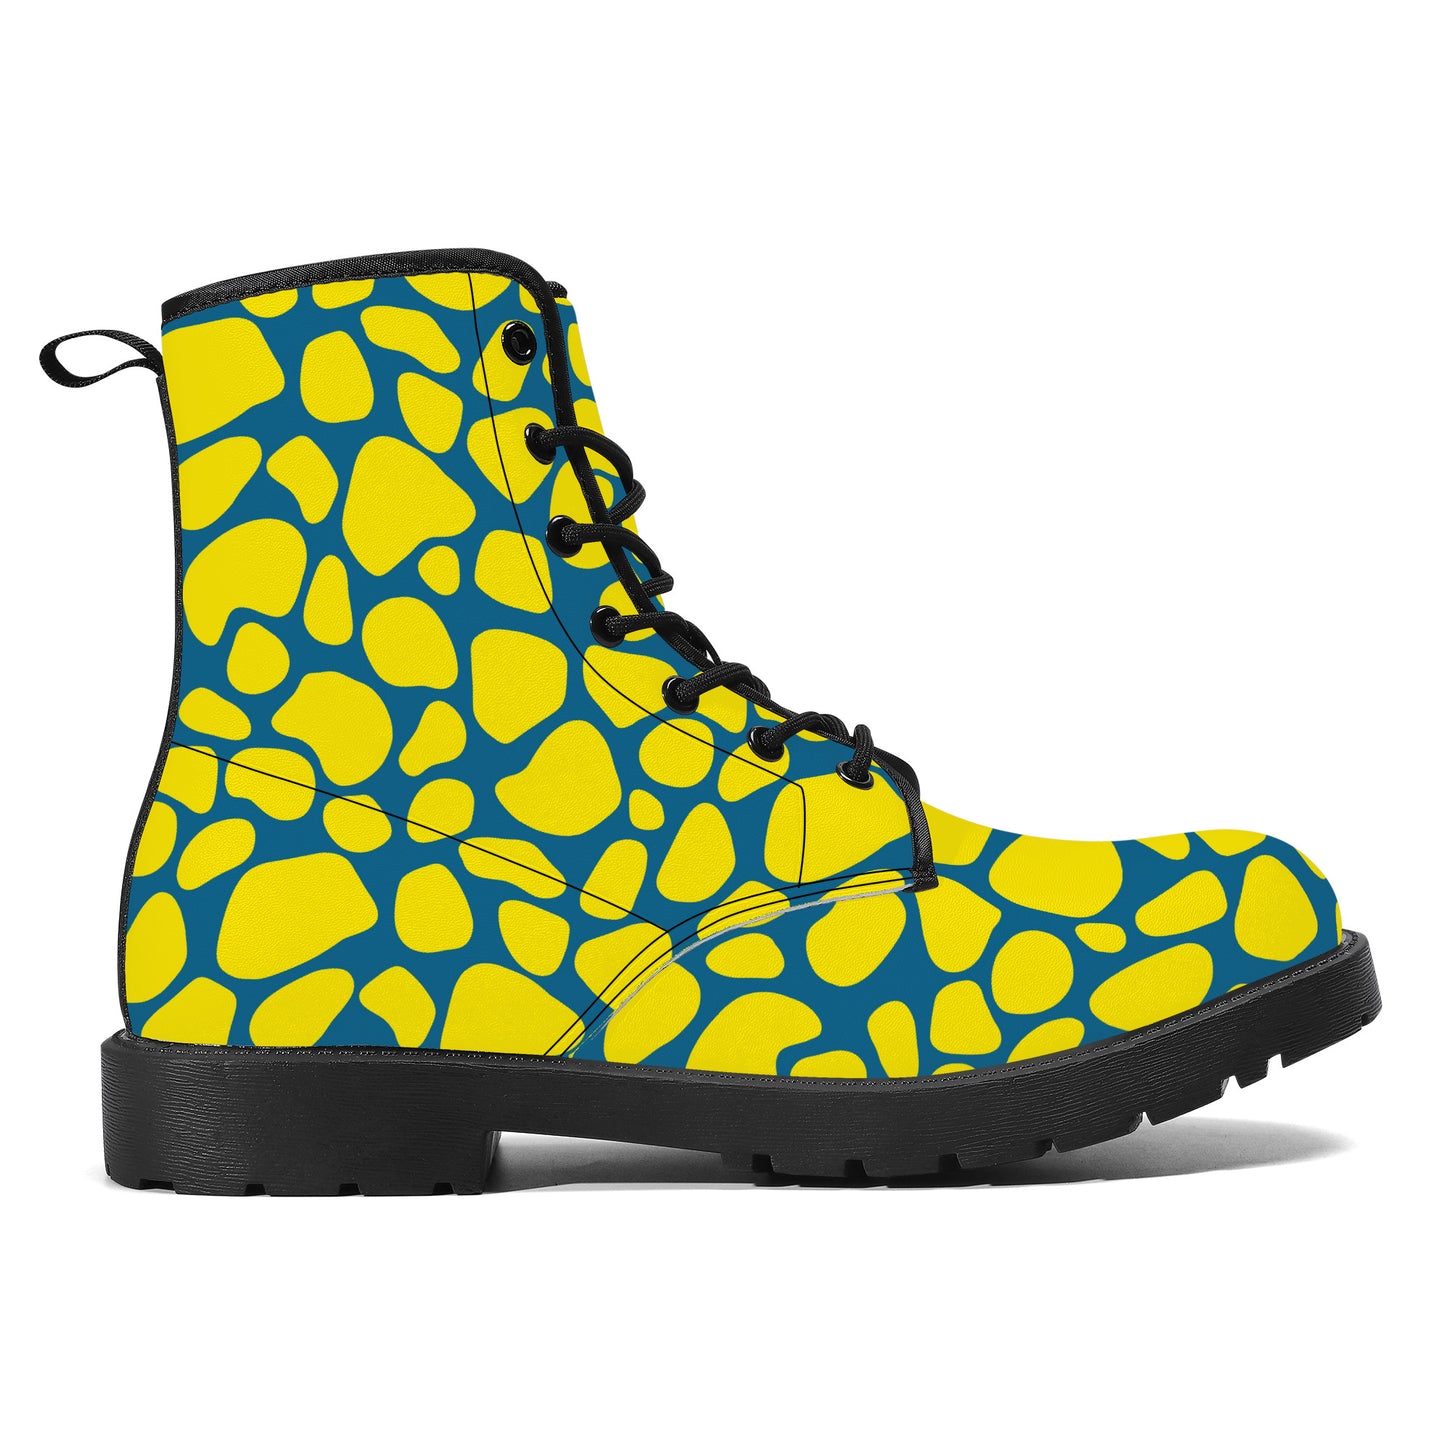 "Giraffe" Eco-friendly Boots